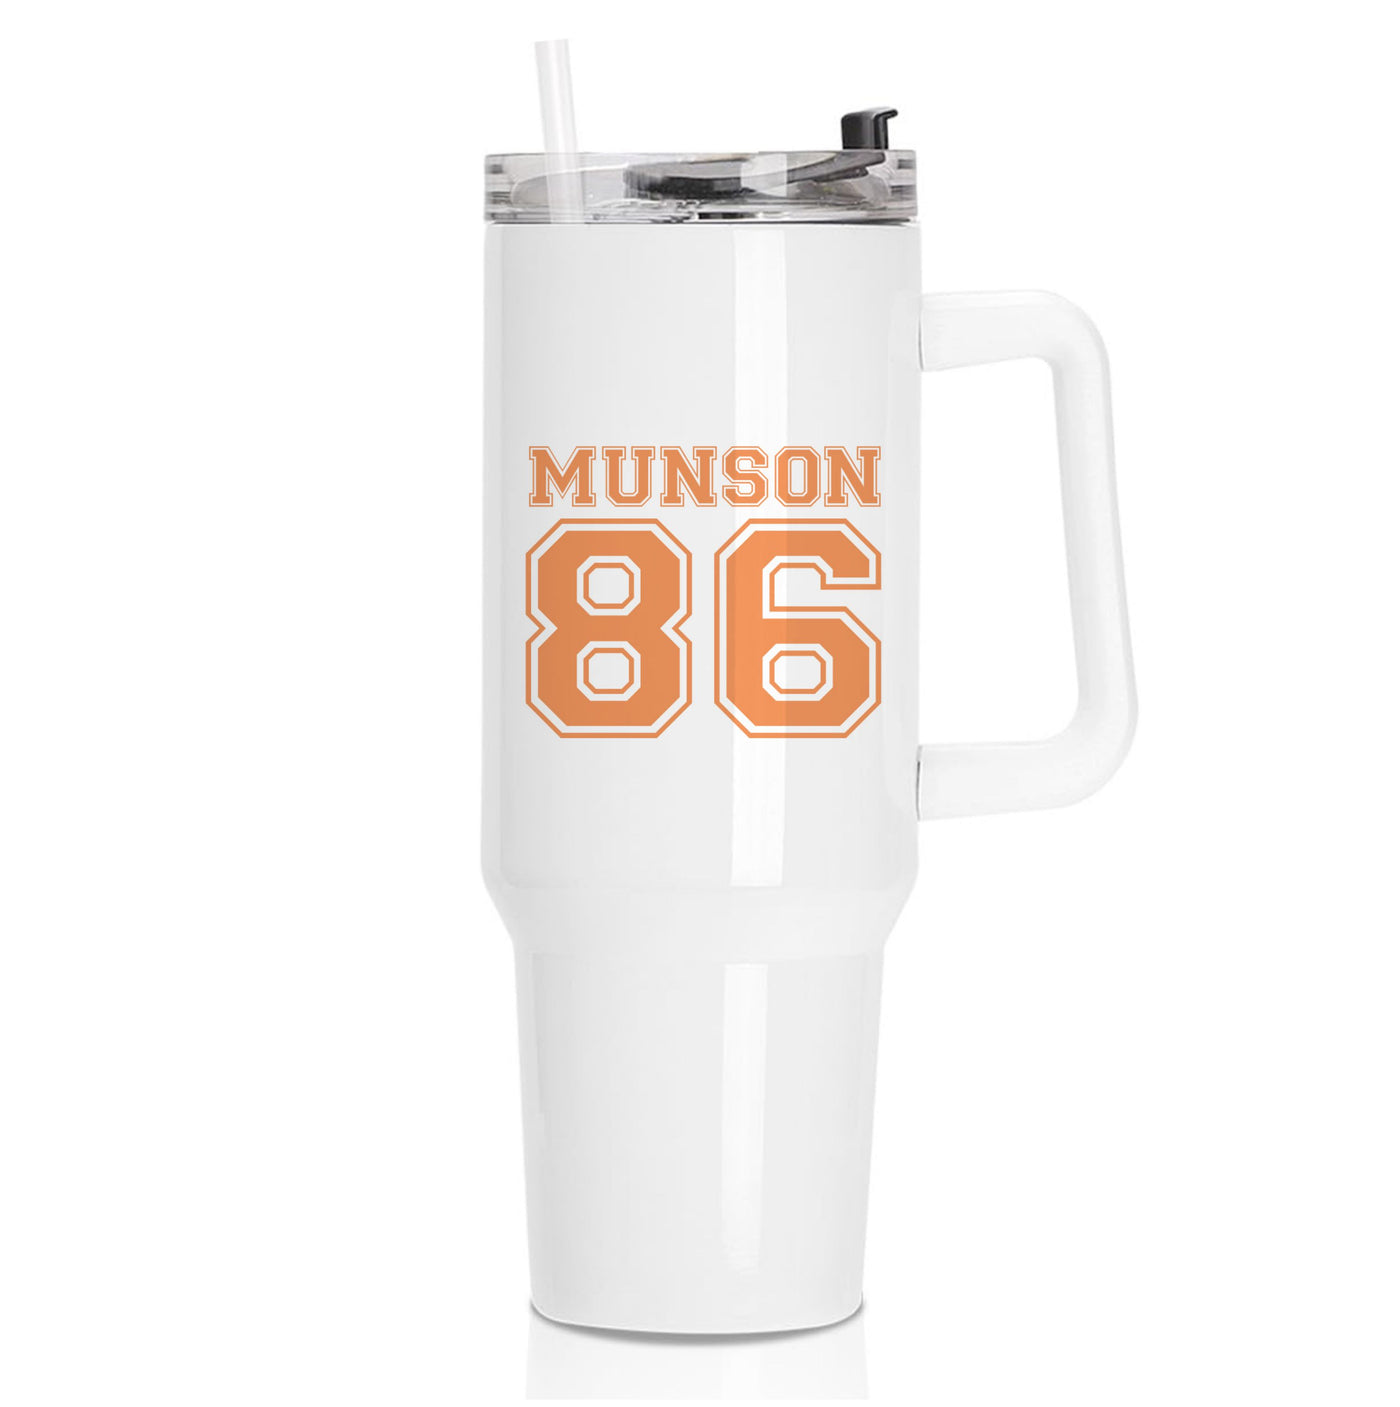 Eddie Munson 86 - Orange Tumbler